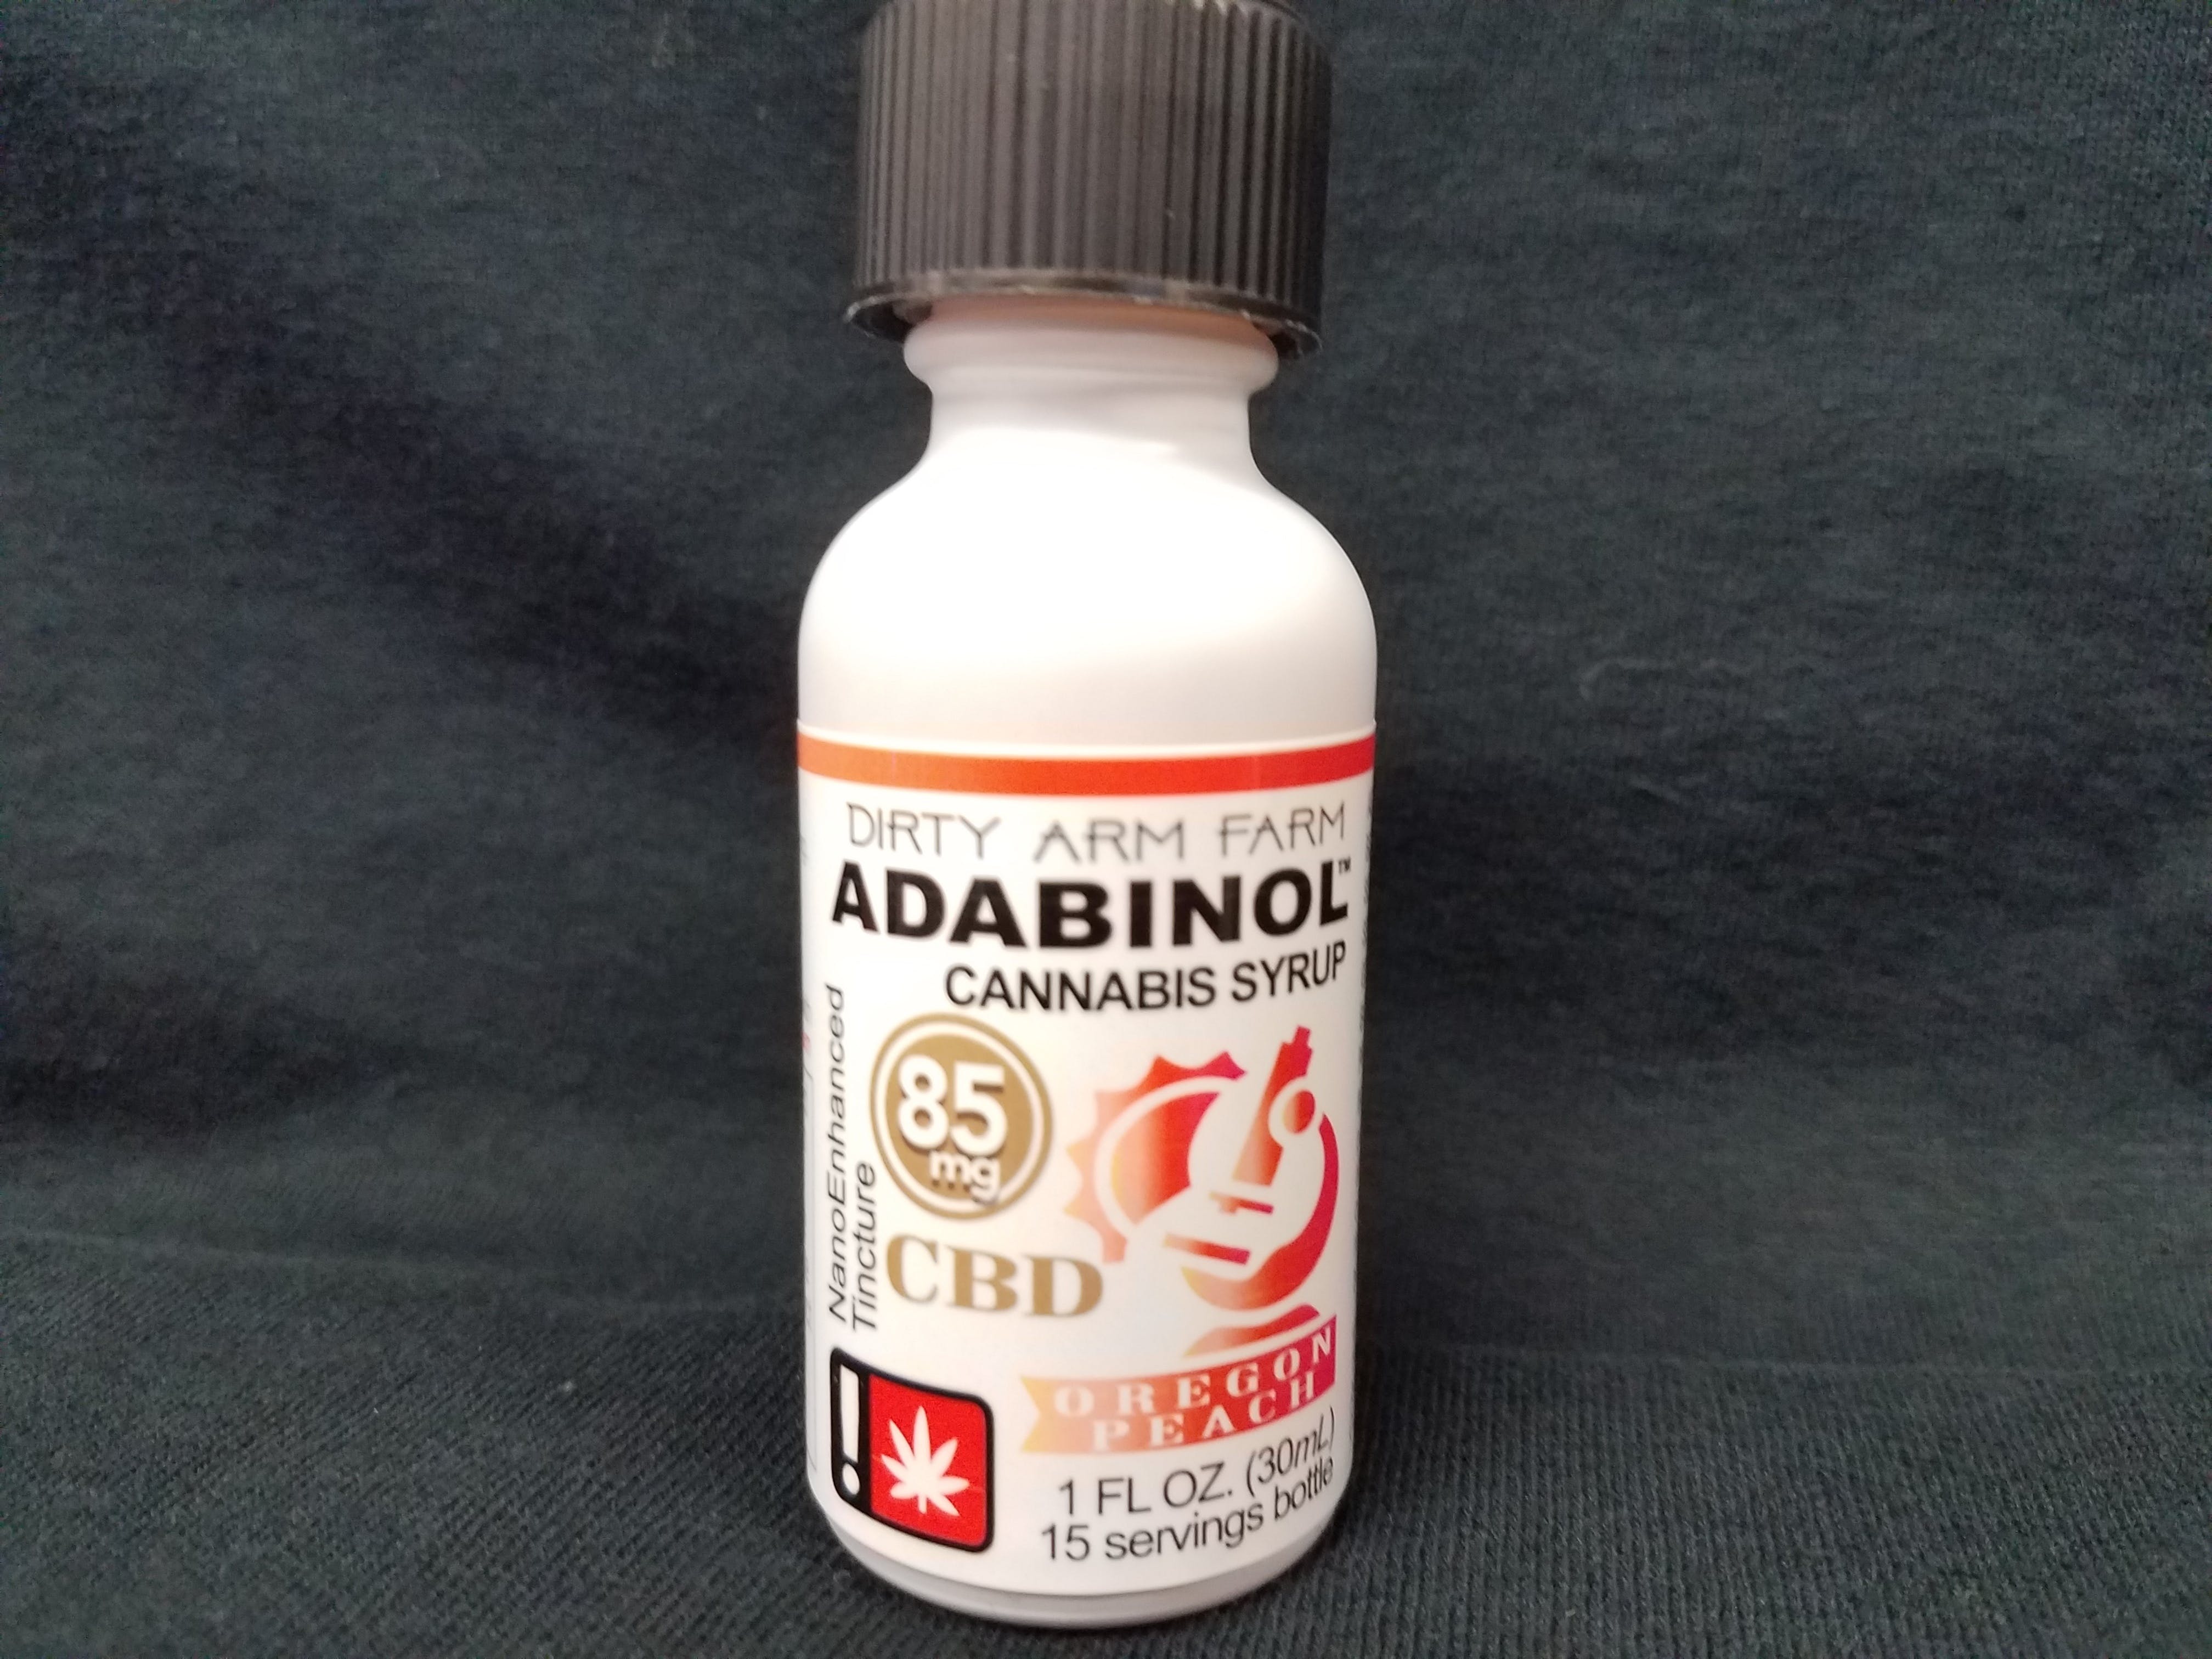 tincture-adabinol-oregon-peach-1oz-cbd